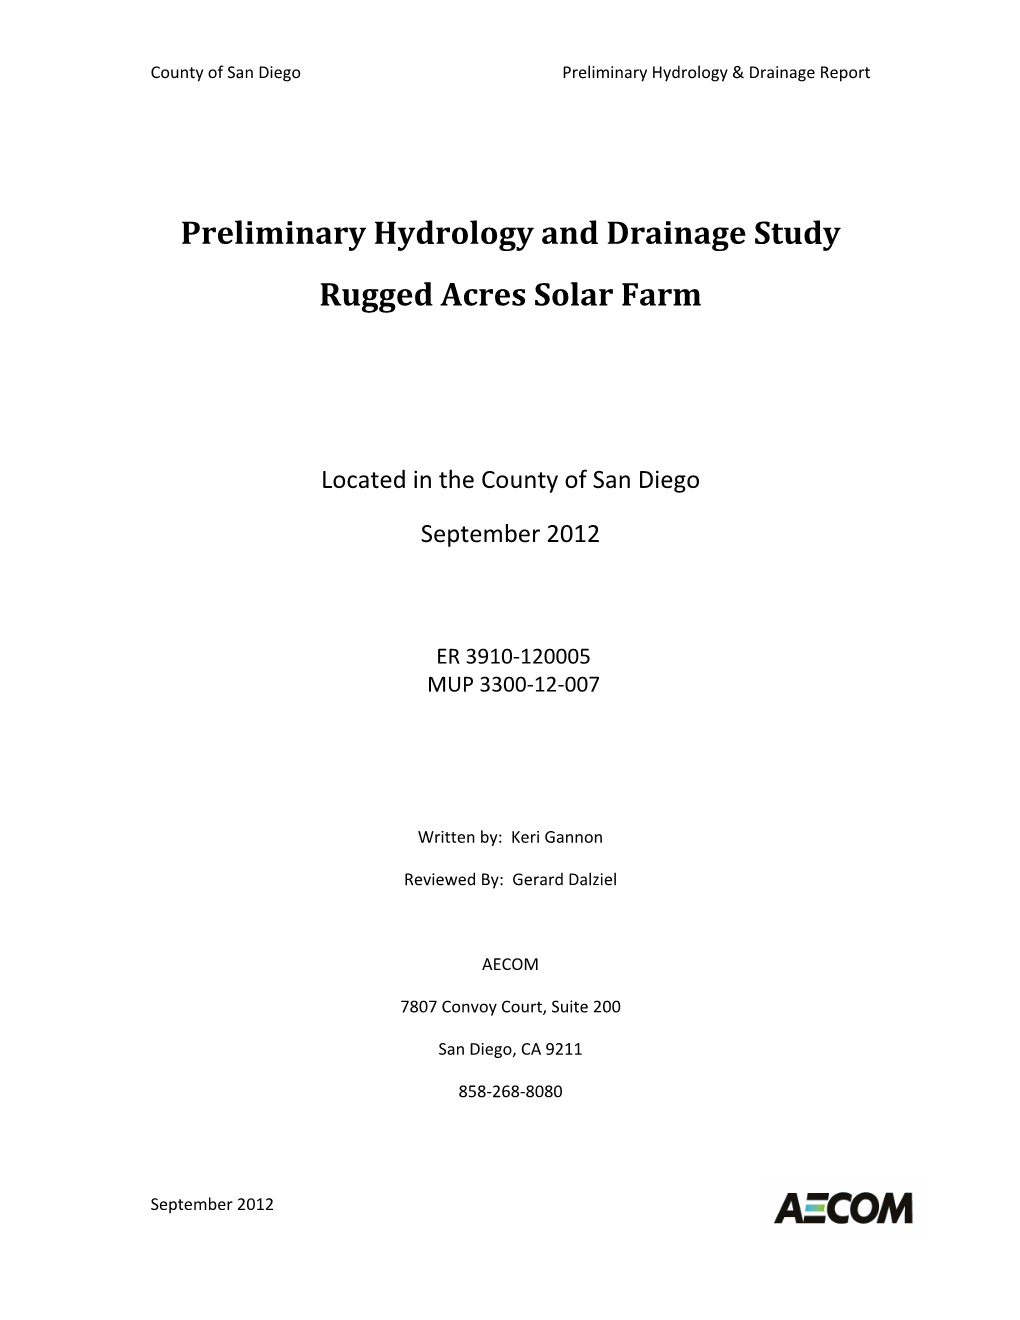 Preliminary Hydrology and Drainage Study Rugged Acres Solar Farm